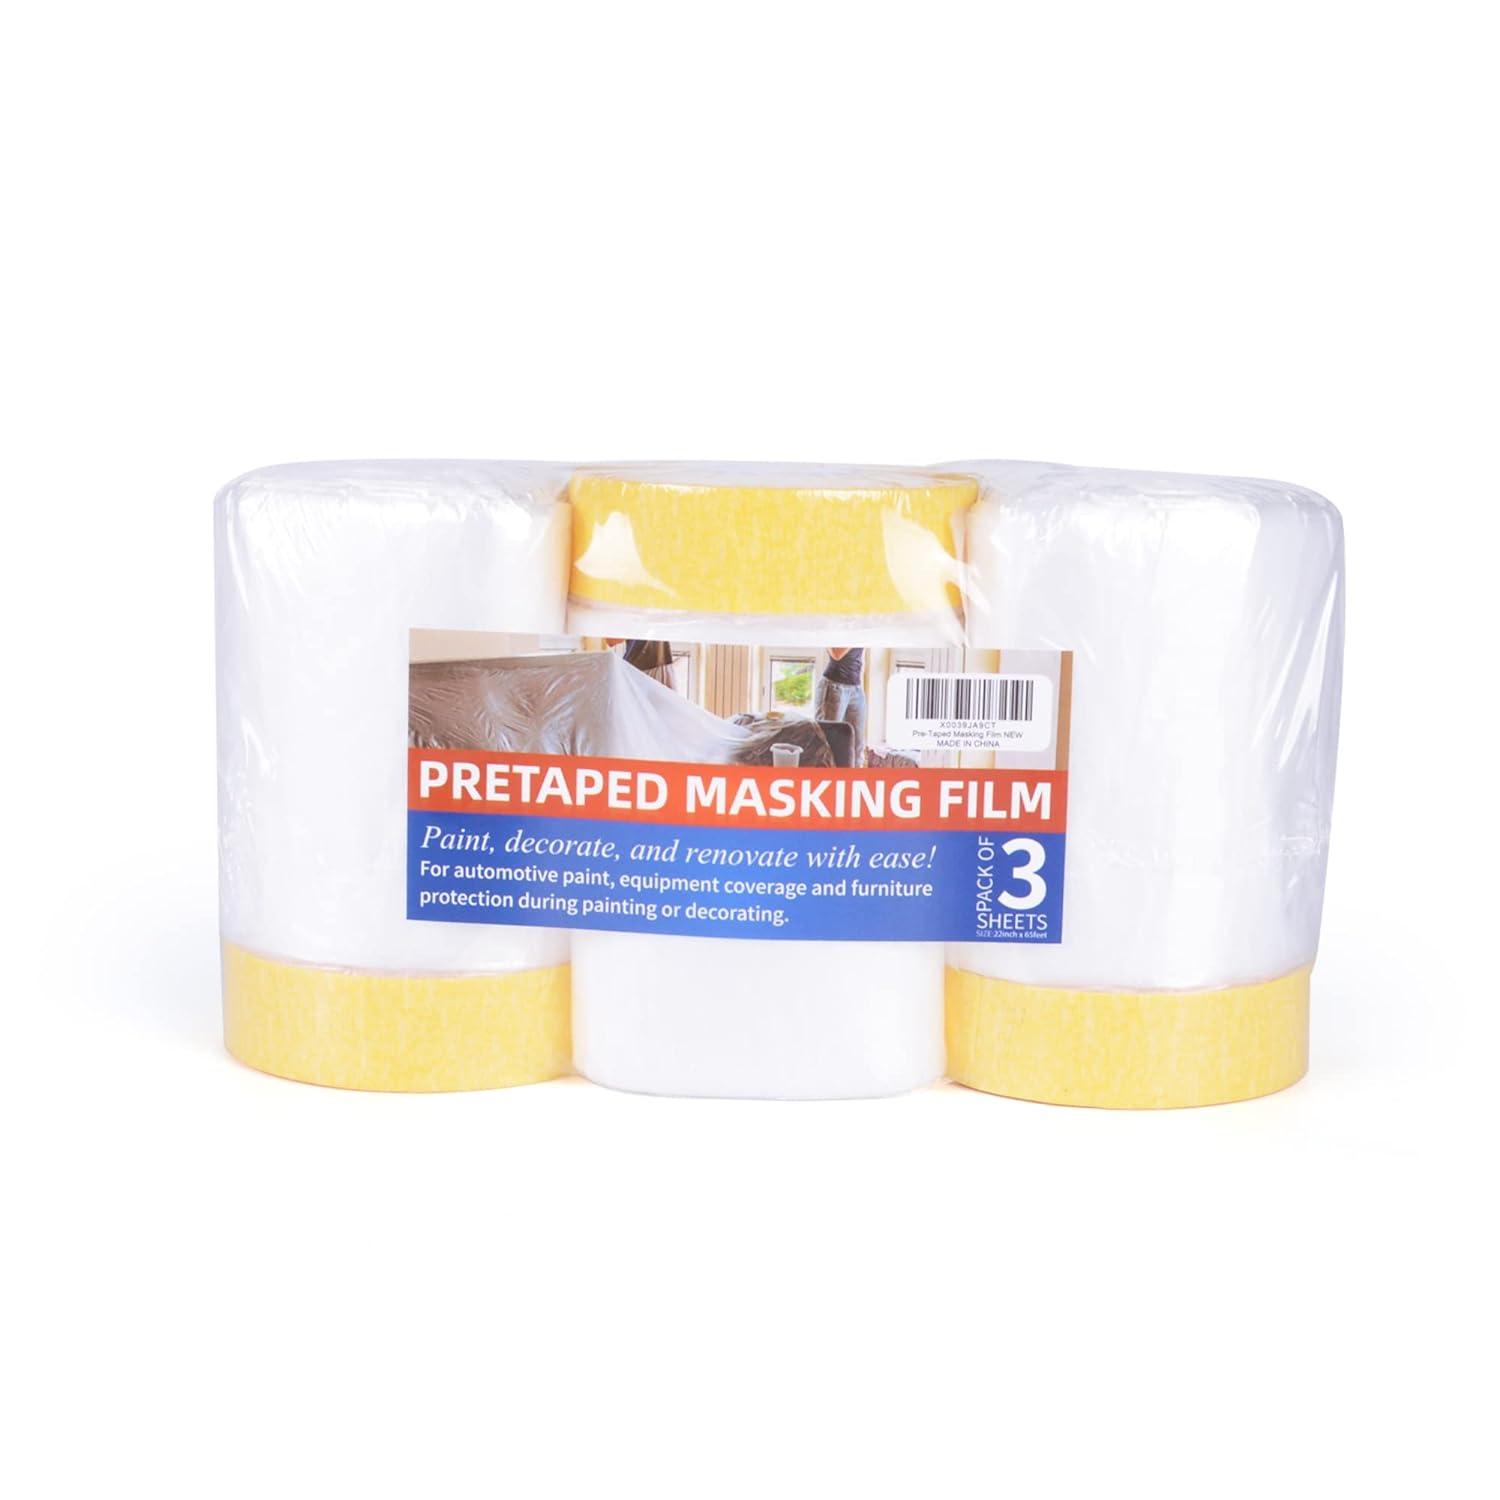 tapebear pre-taped masking film tape and drape plastic sheeting roll automotive painters masking tape film